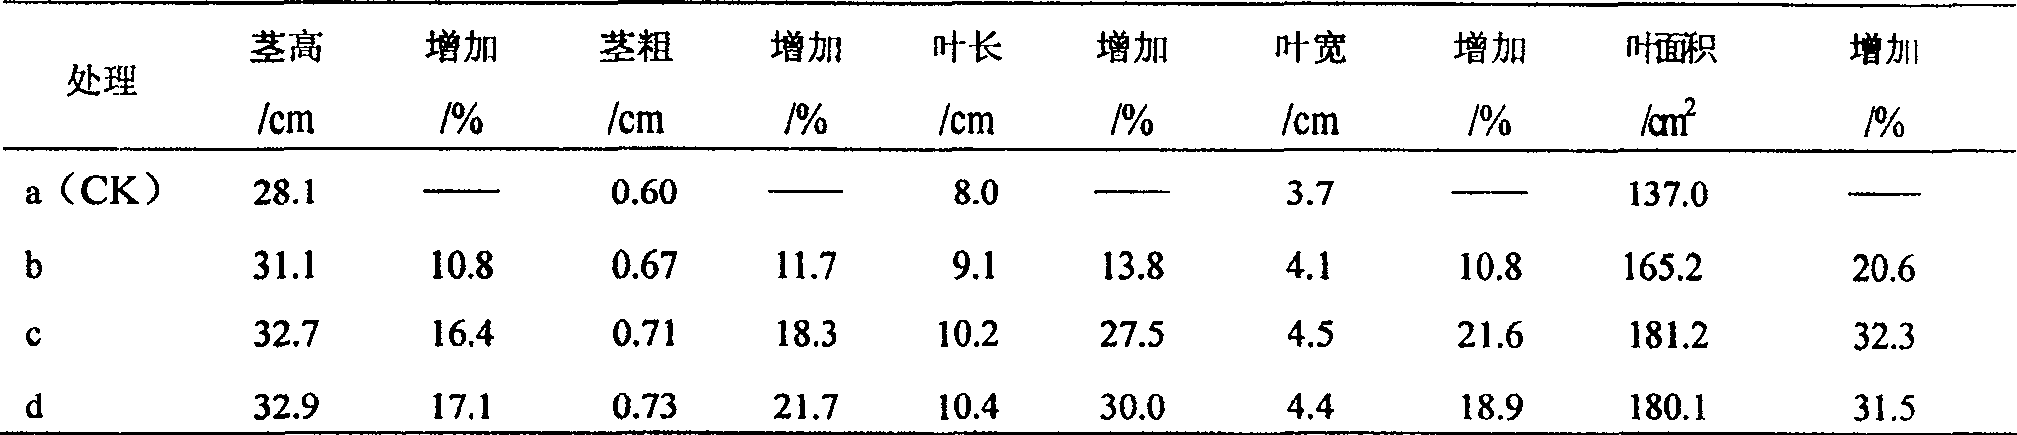 Nutritional type ginseng growth regulator